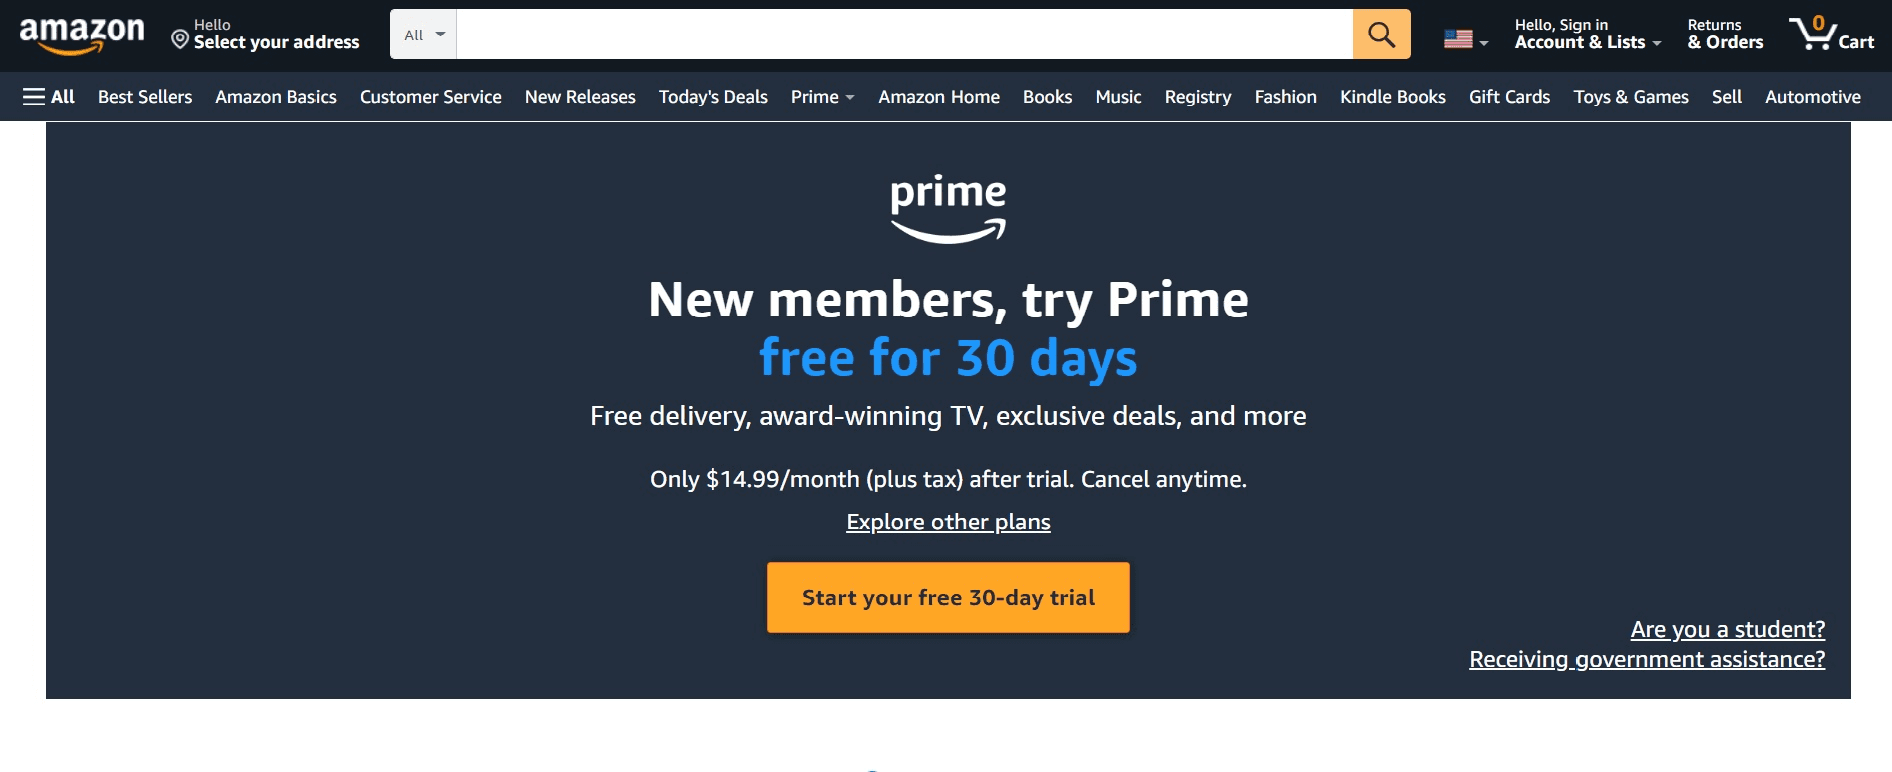 Become an Amazon Prime member